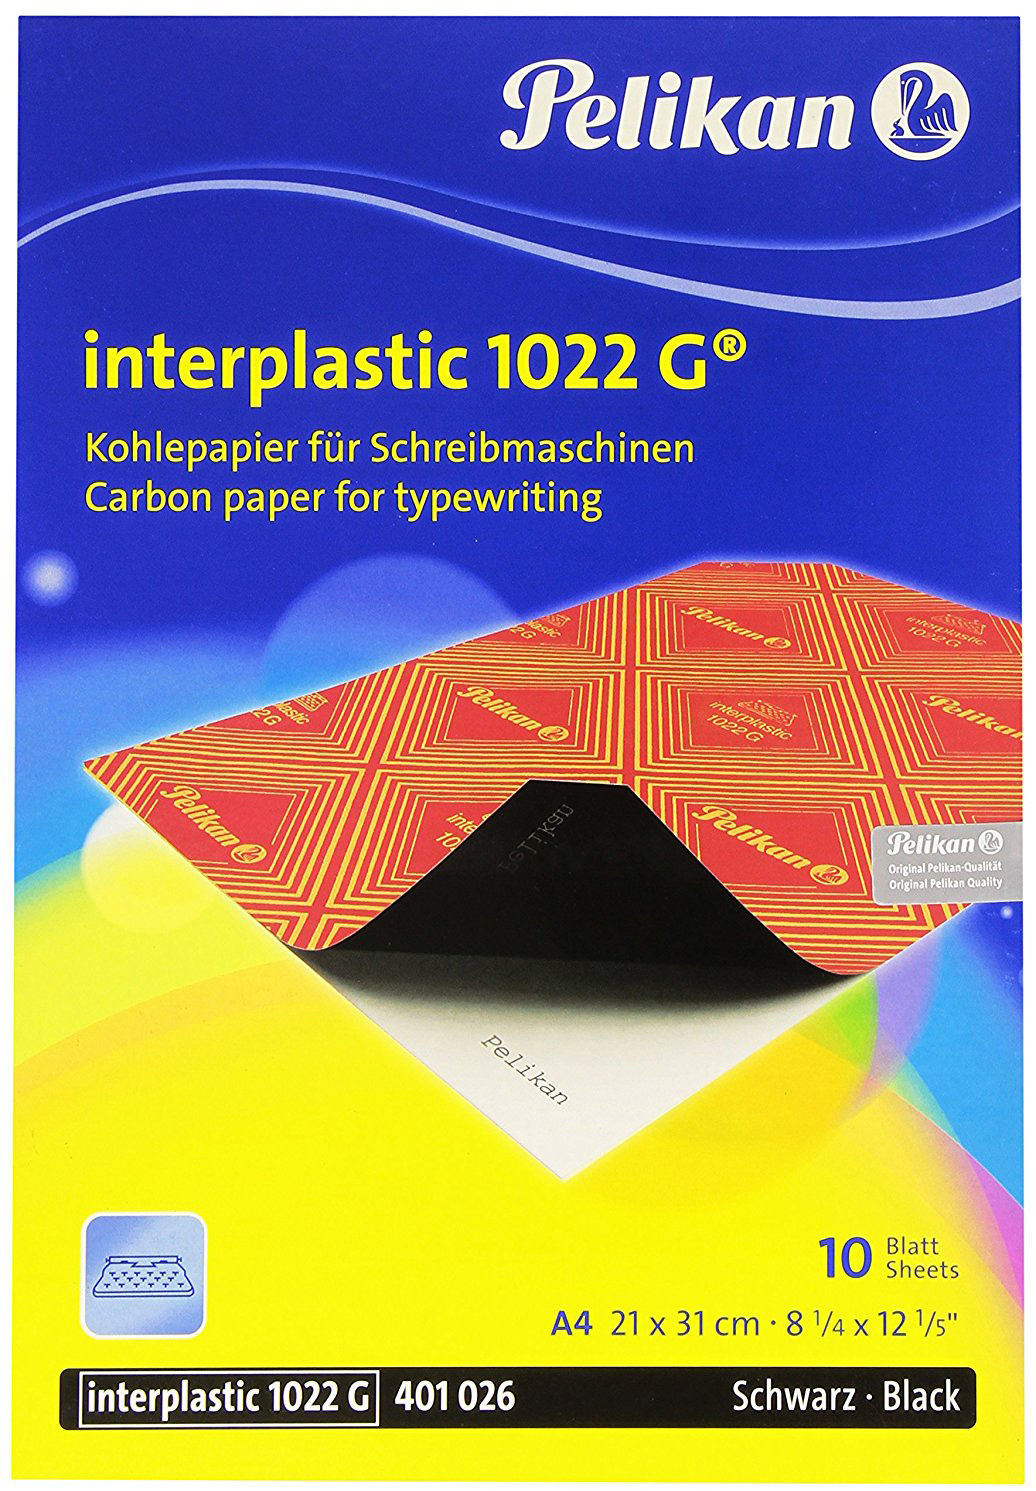 PELIKAN Kohlepapiere 1022G A4 401026 interplastic 10 Blatt